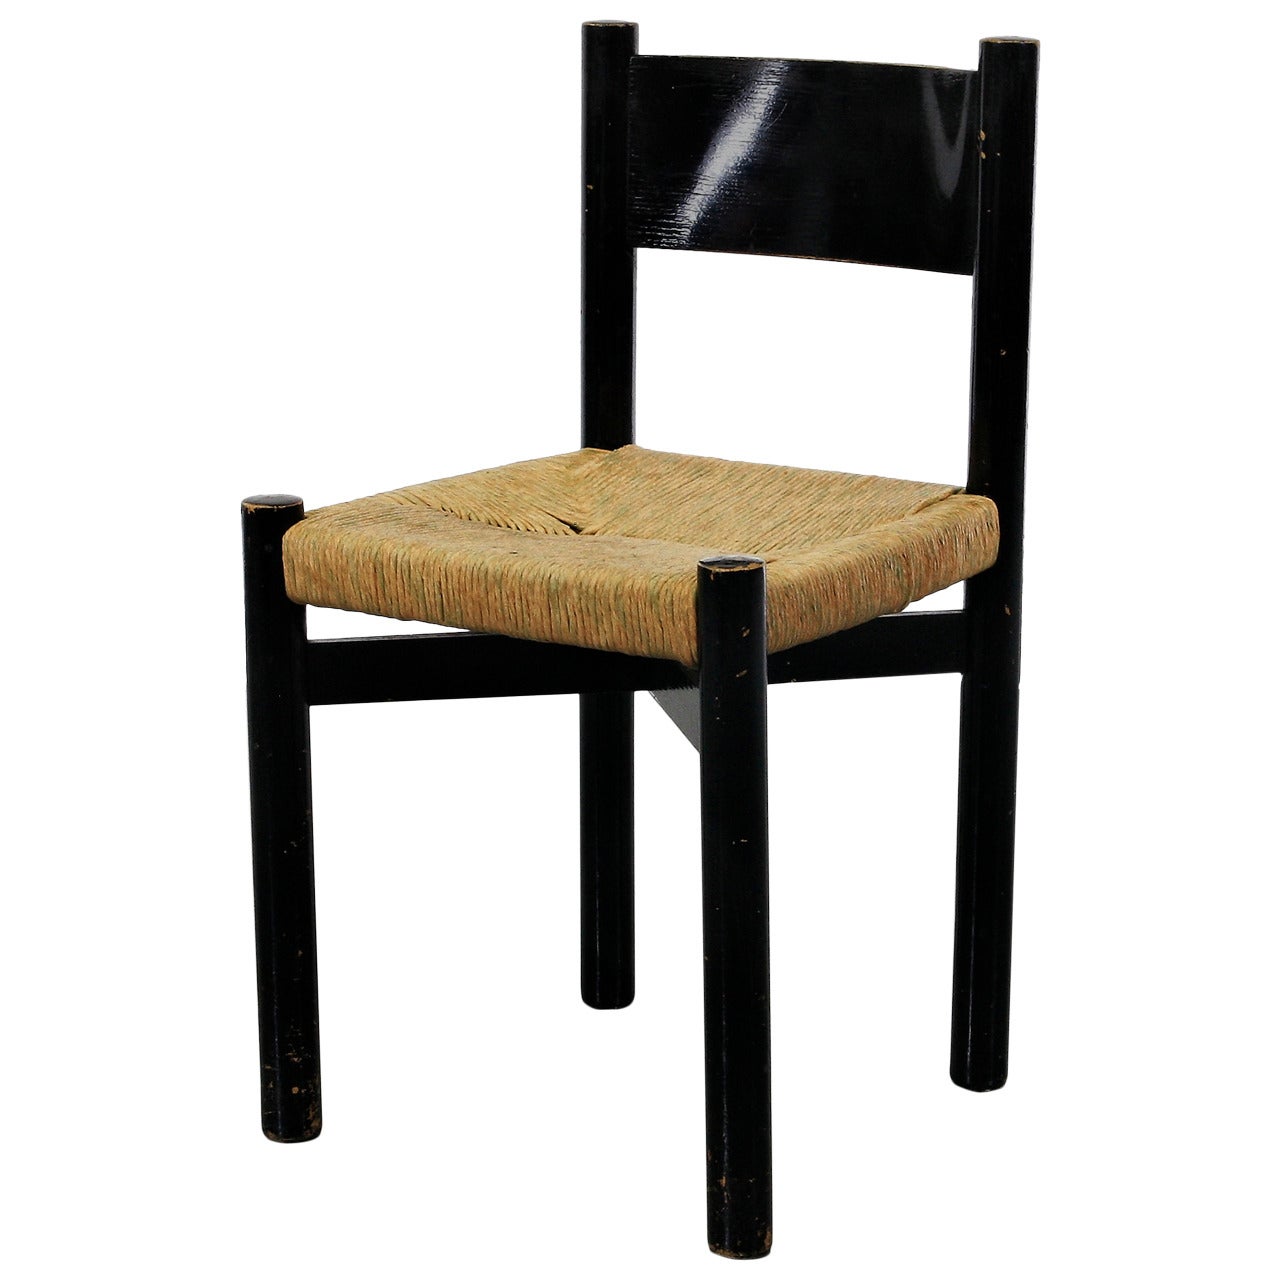 French Charlotte Perriand Mid-Century Modern Black Meribel Dining Chair, circa 1950